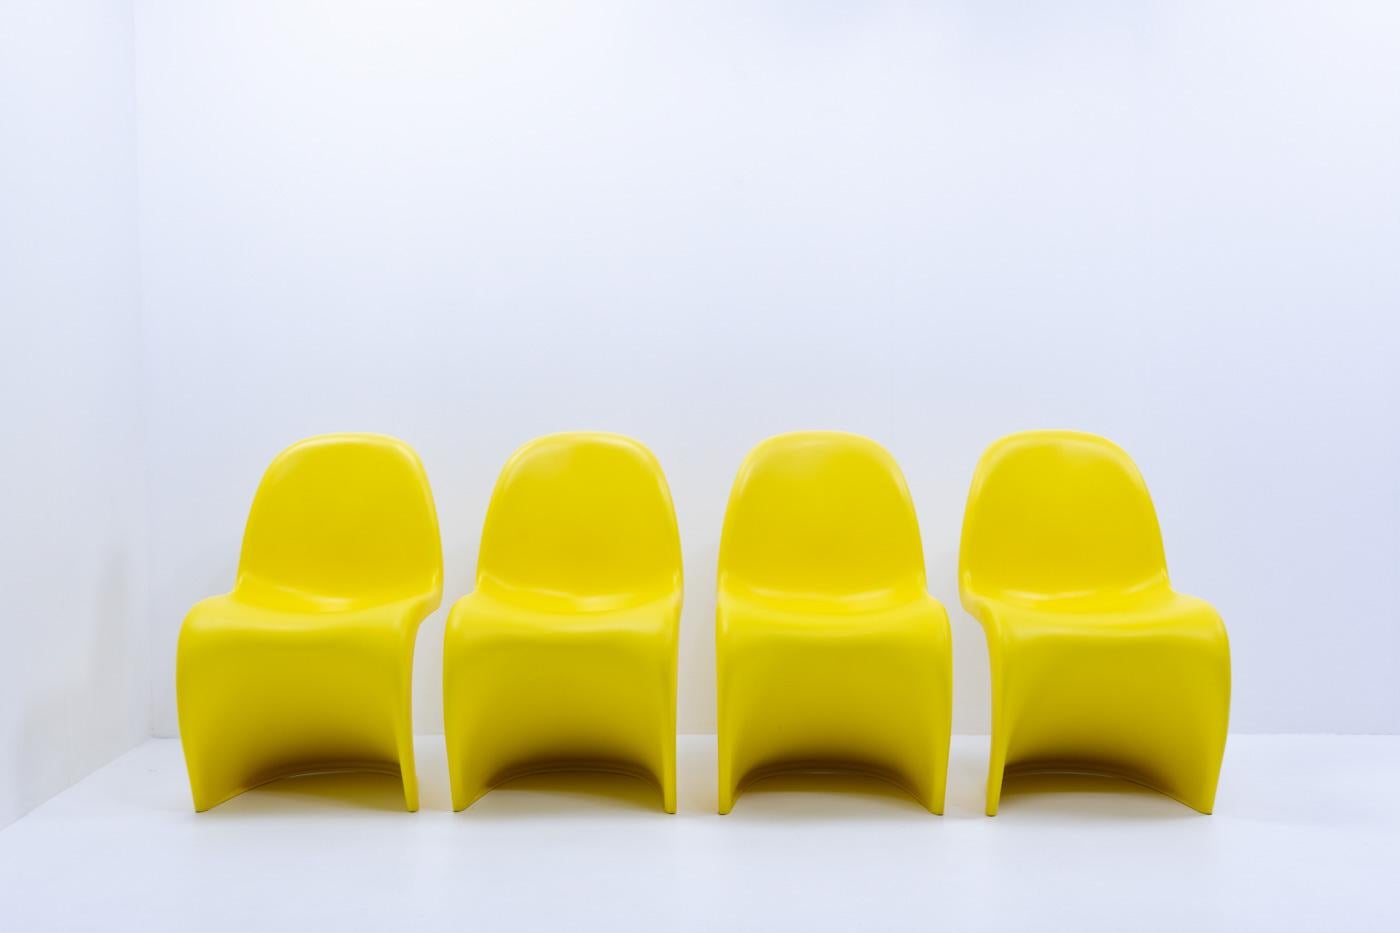 German Verner Panton Chairs, Yellow by Vitra, 2000s